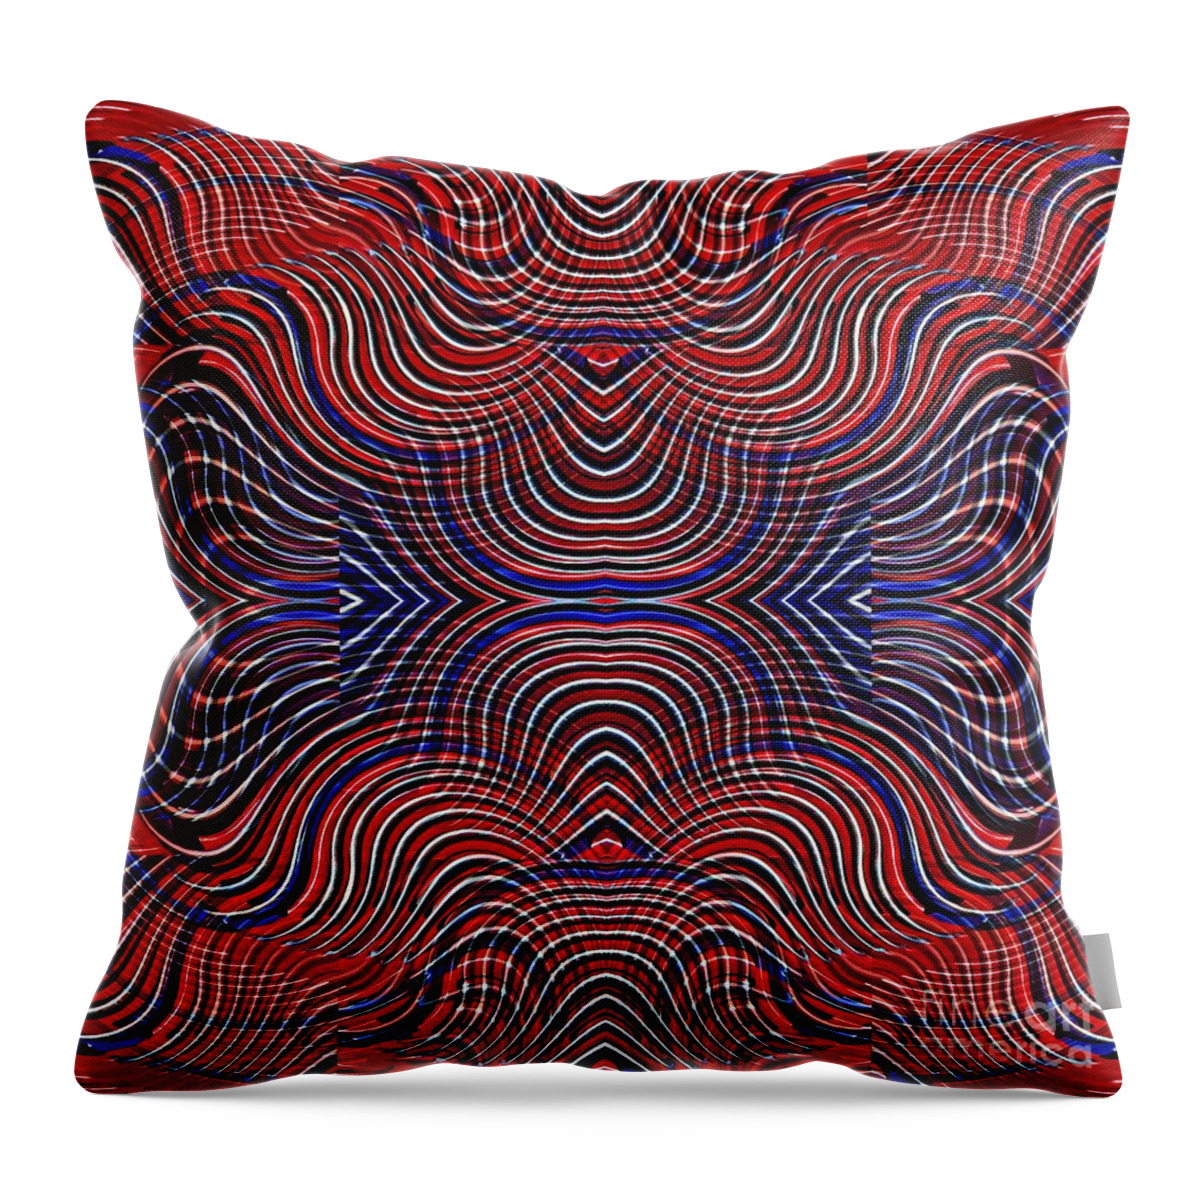 Swirl Throw Pillow featuring the digital art Americana Swirl Design 10 by Sarah Loft